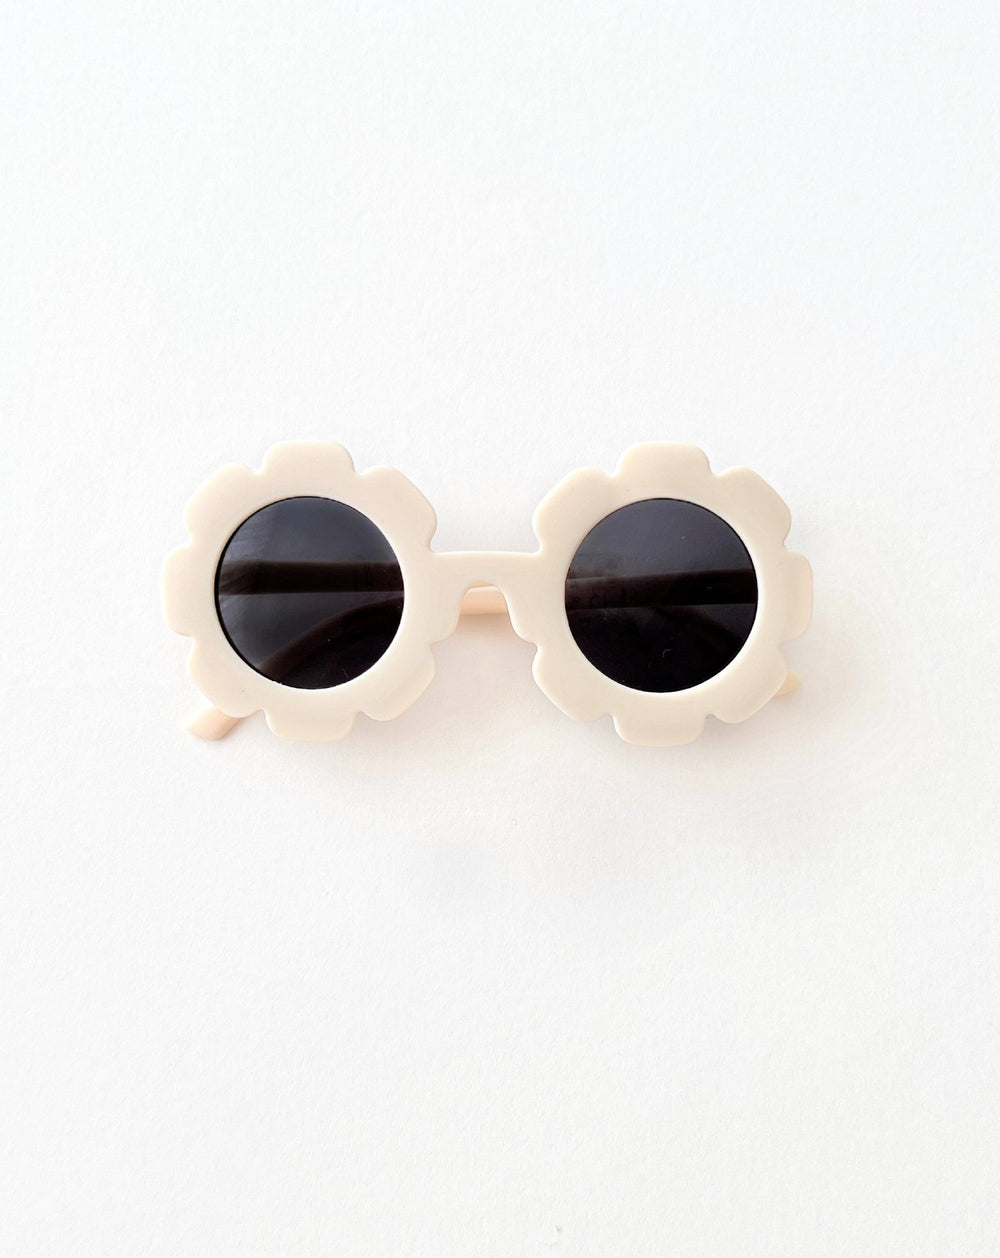 Voiakiu Panda Sunglasses | Toddler Sunglasses for Fishing - Kids Sunglasses  Polarized UV Protection Panda Sunglasses Girls Panda Glasses Cute Outdoor